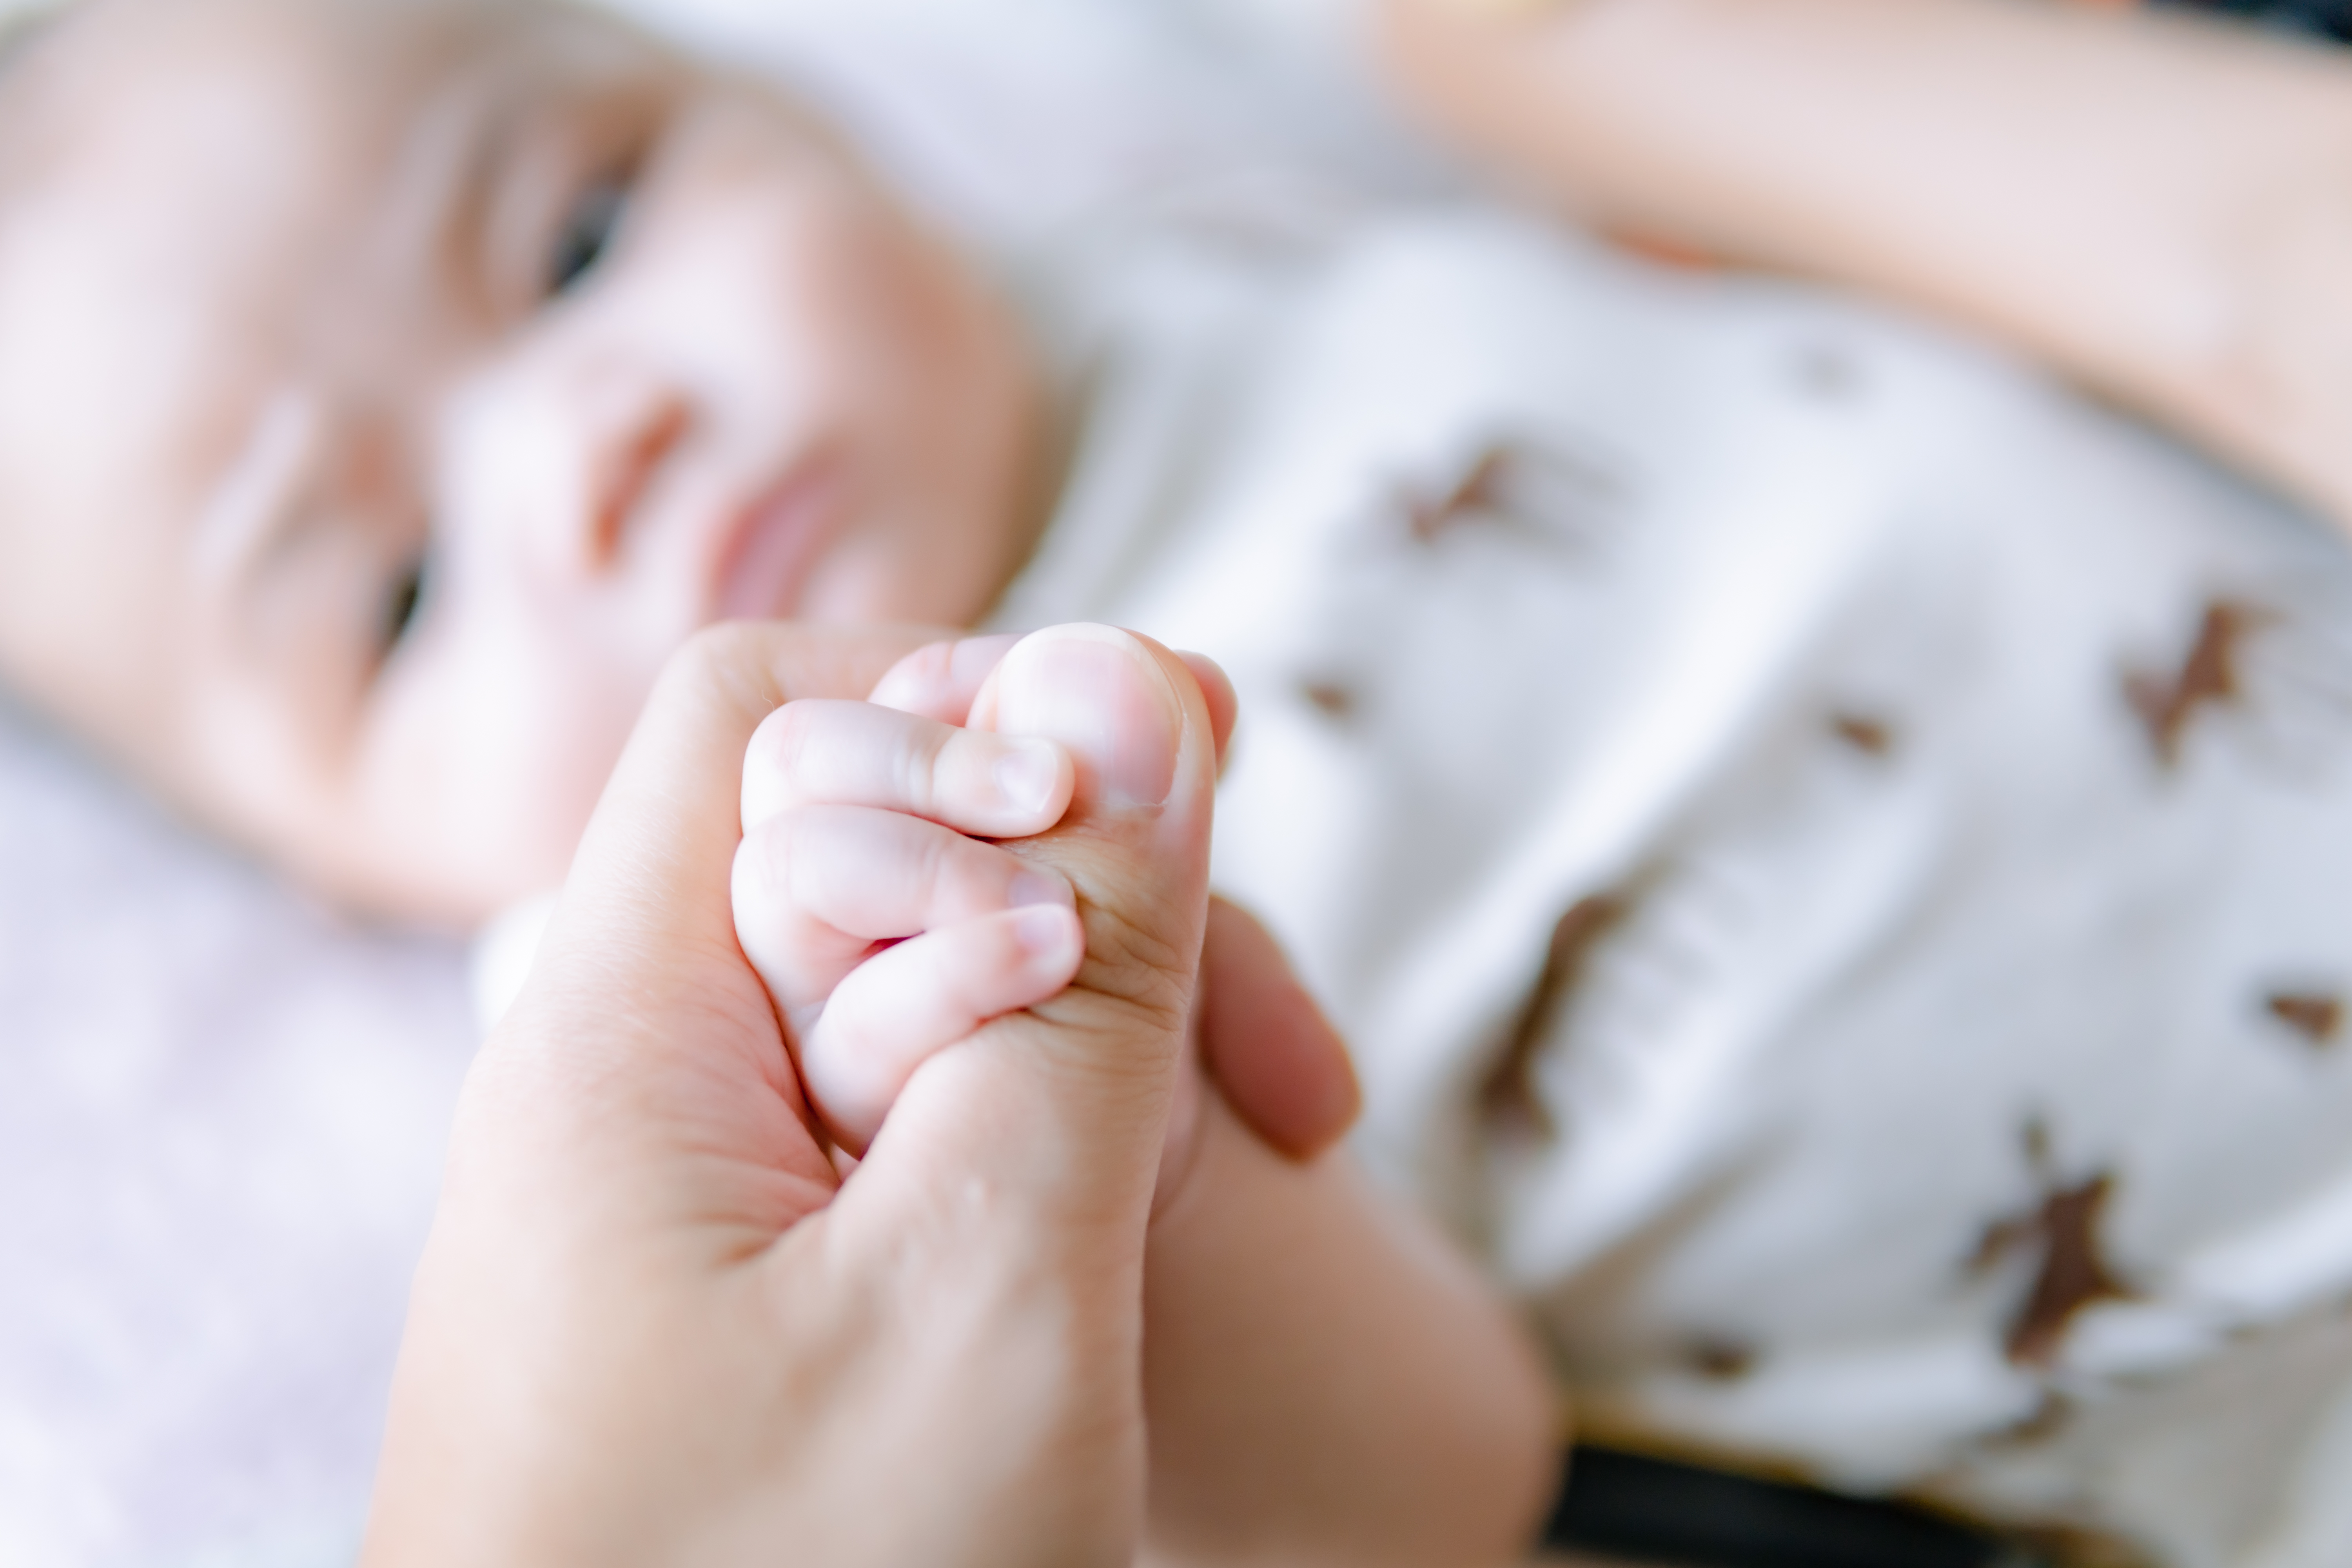 Newborn Newborn baby holding parent's hand, baby hand baby holding parent's hand, baby hand